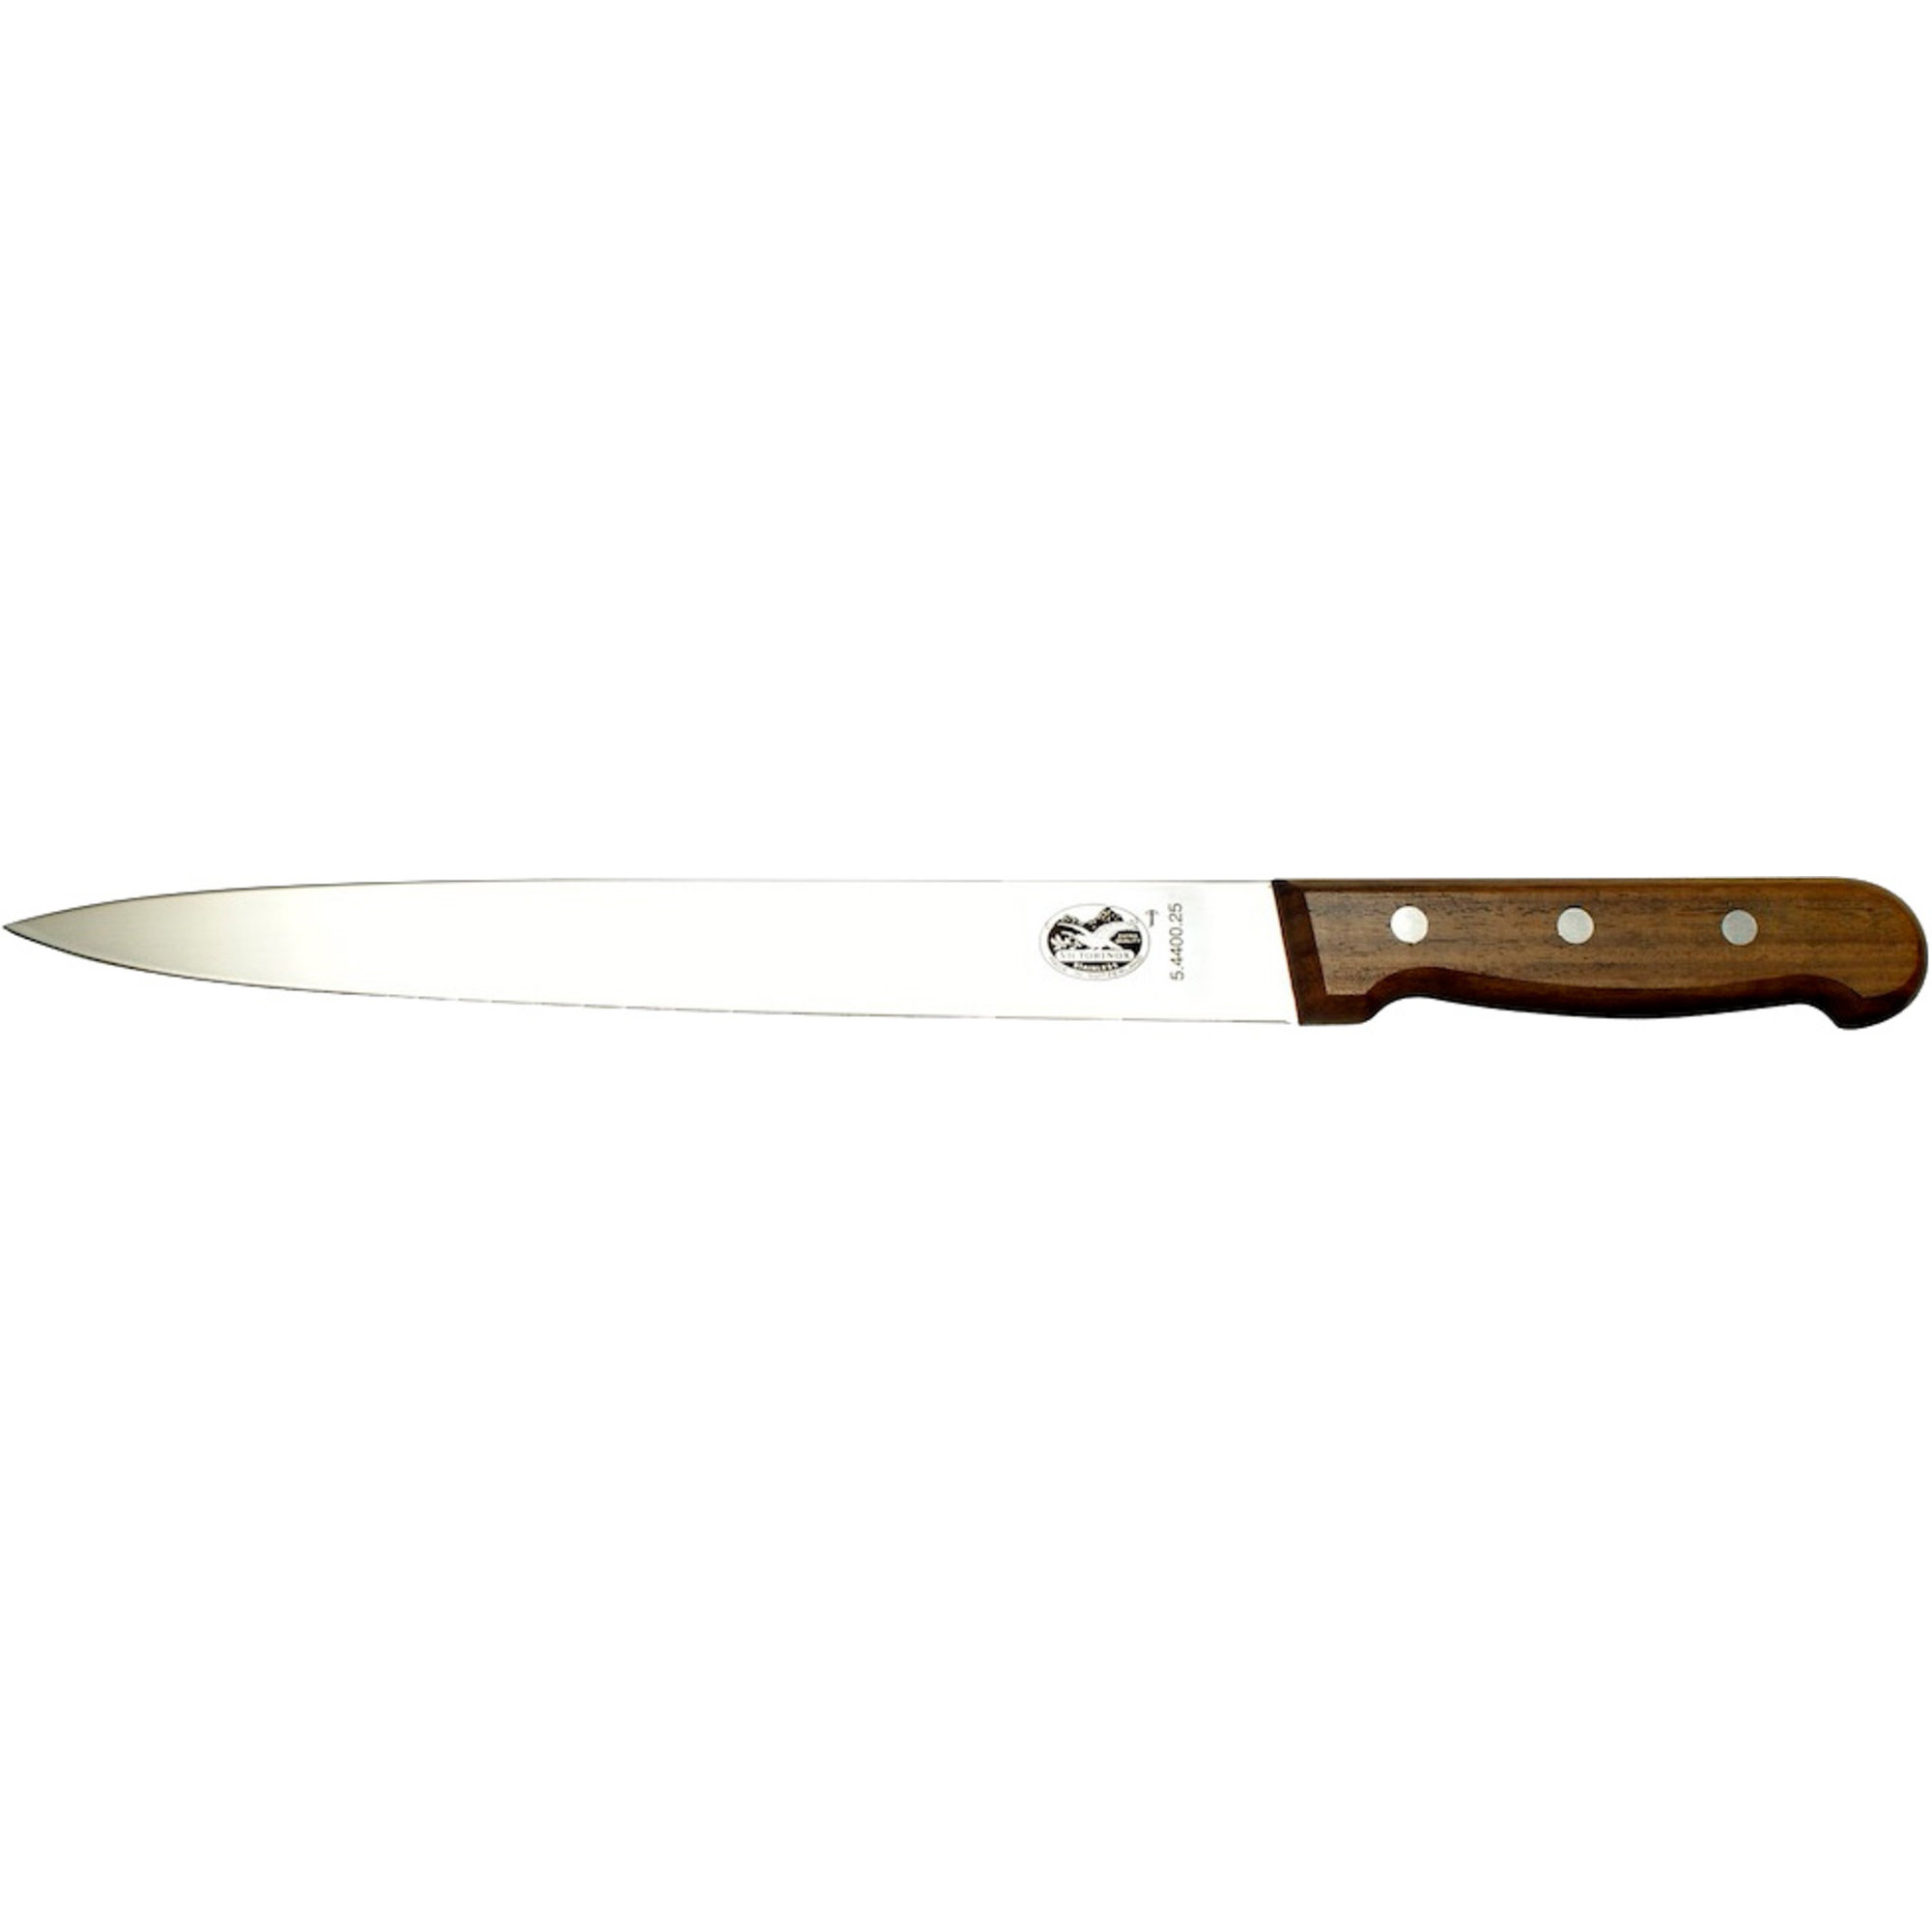 Victorinox Spids universalkniv med skæfte i rosentræ 25cm.